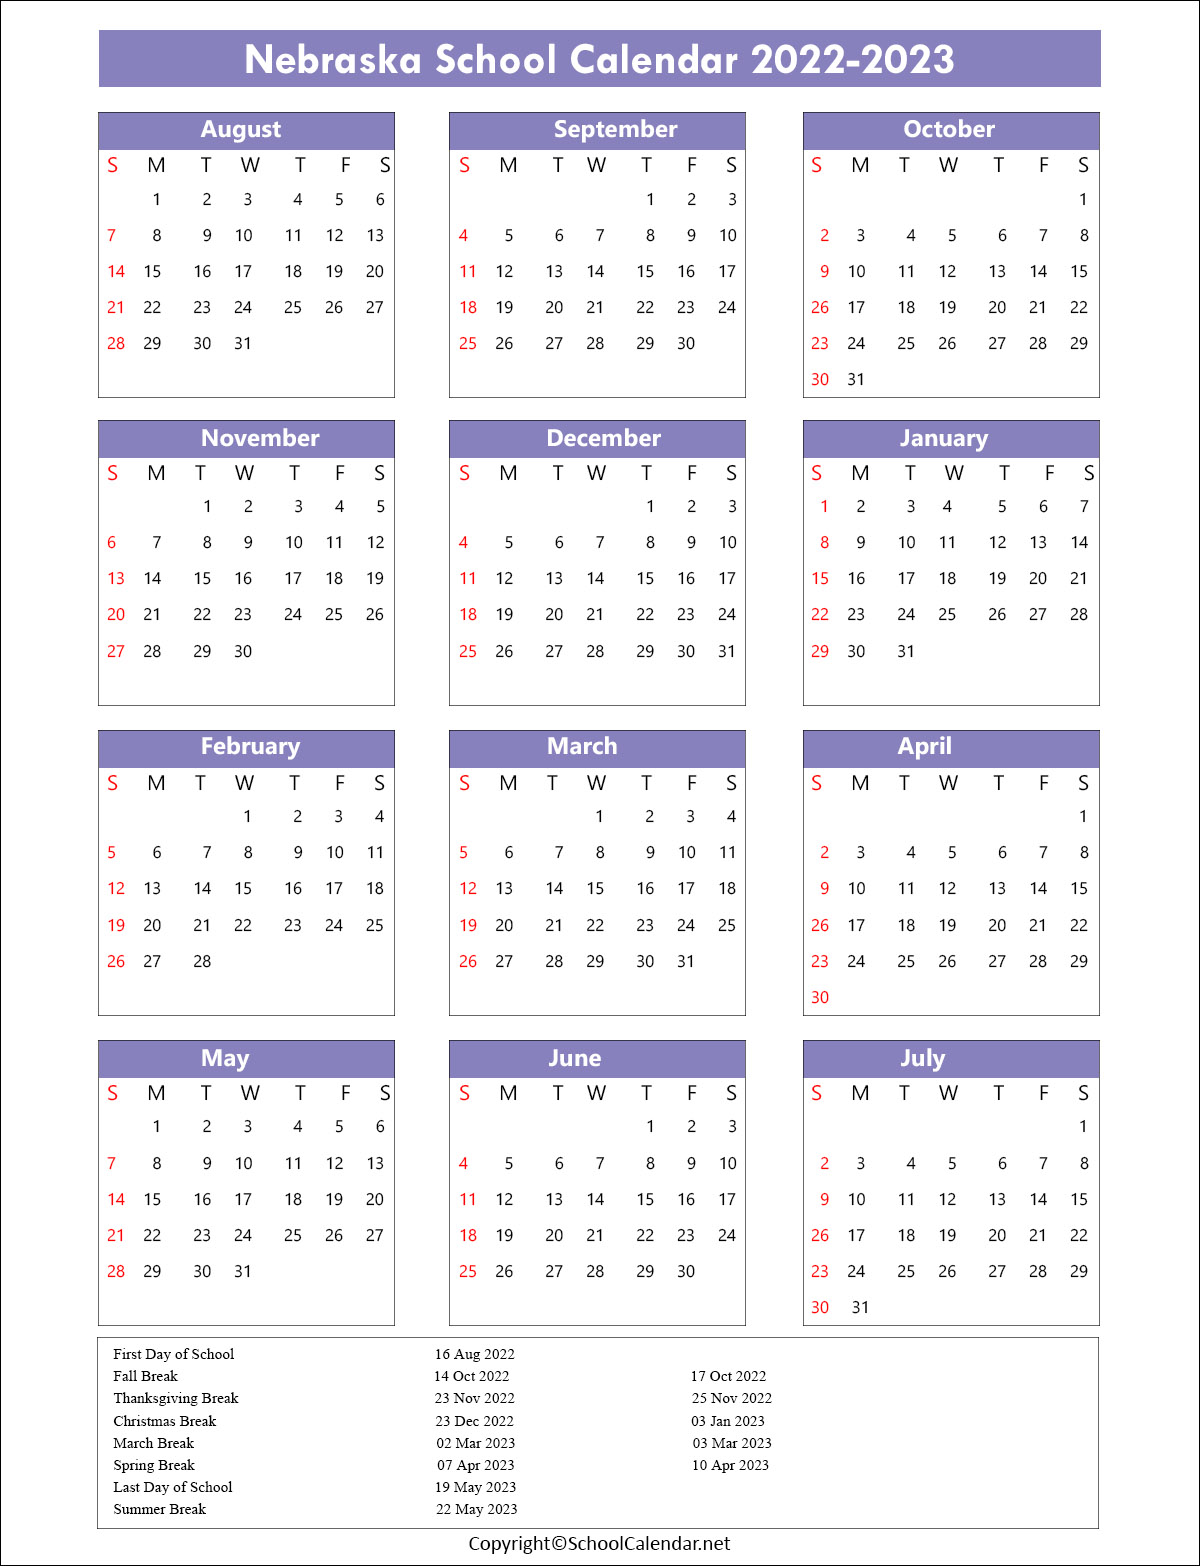 Nebraska School Calendar 2022